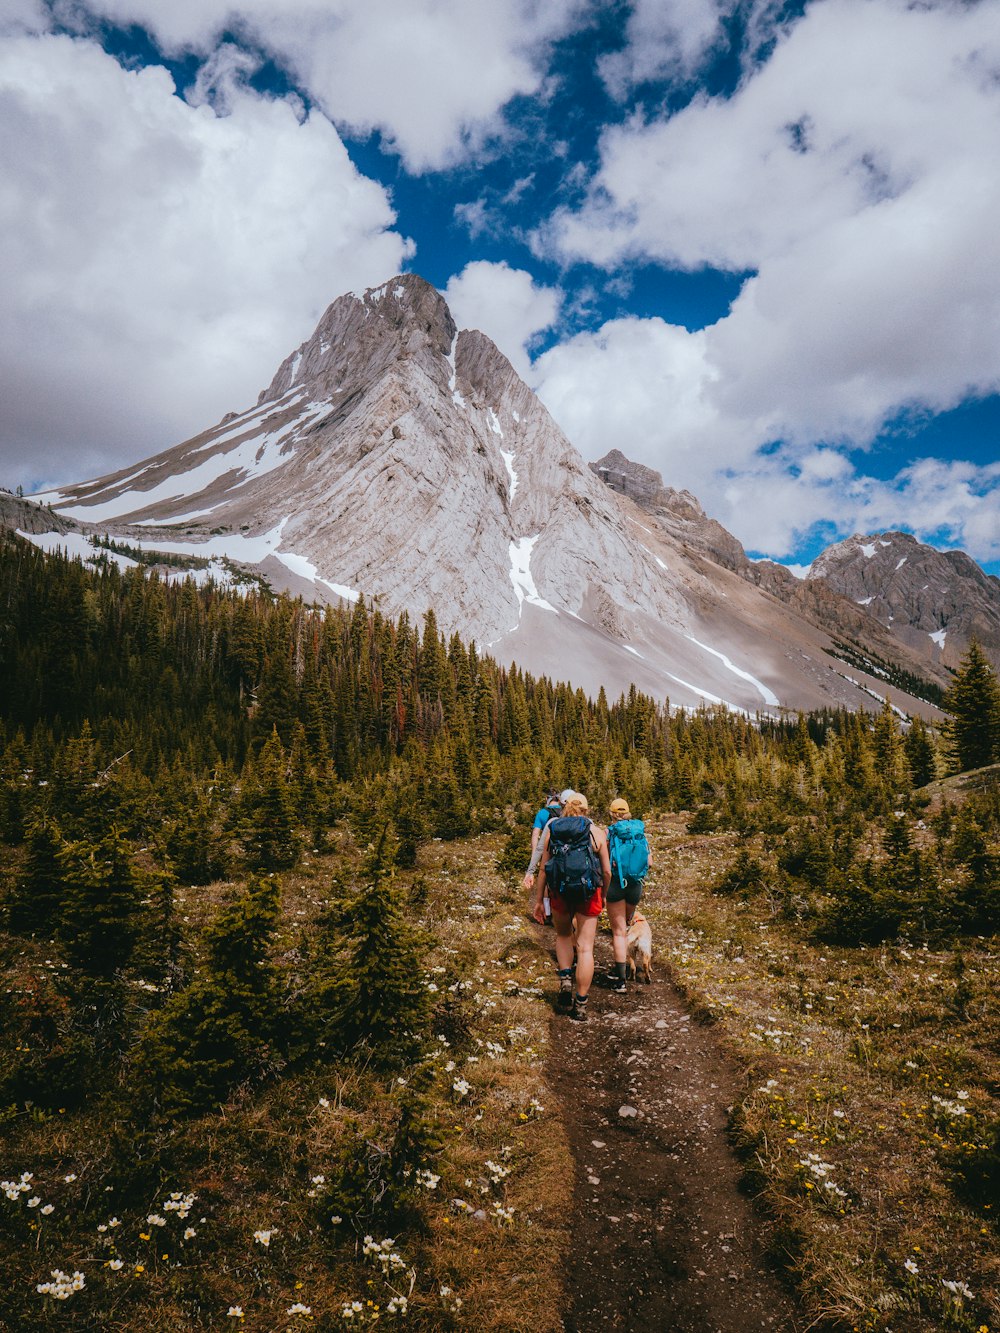 2 people hiking on mountain during daytime